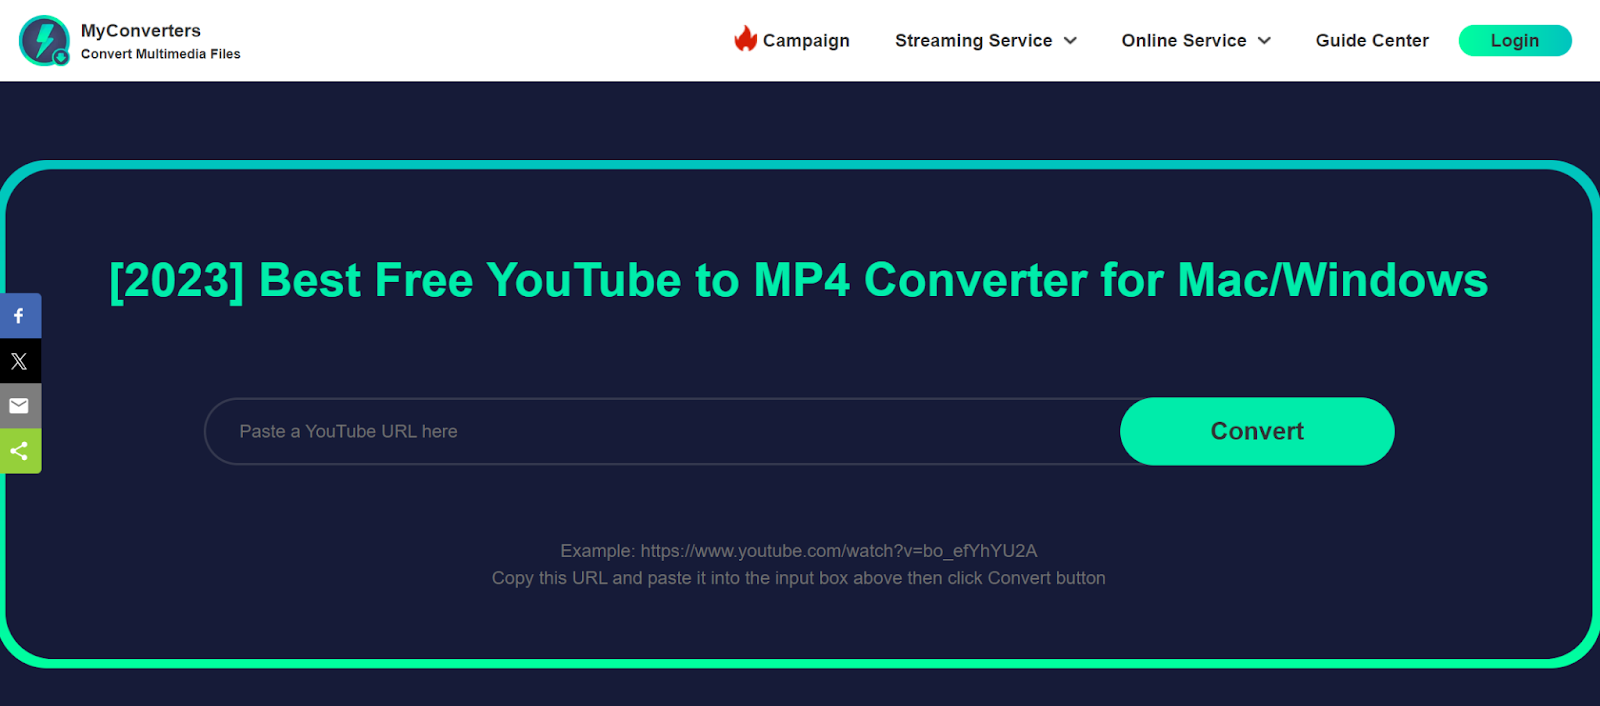 MyConverters - YouTube to MP4 converter